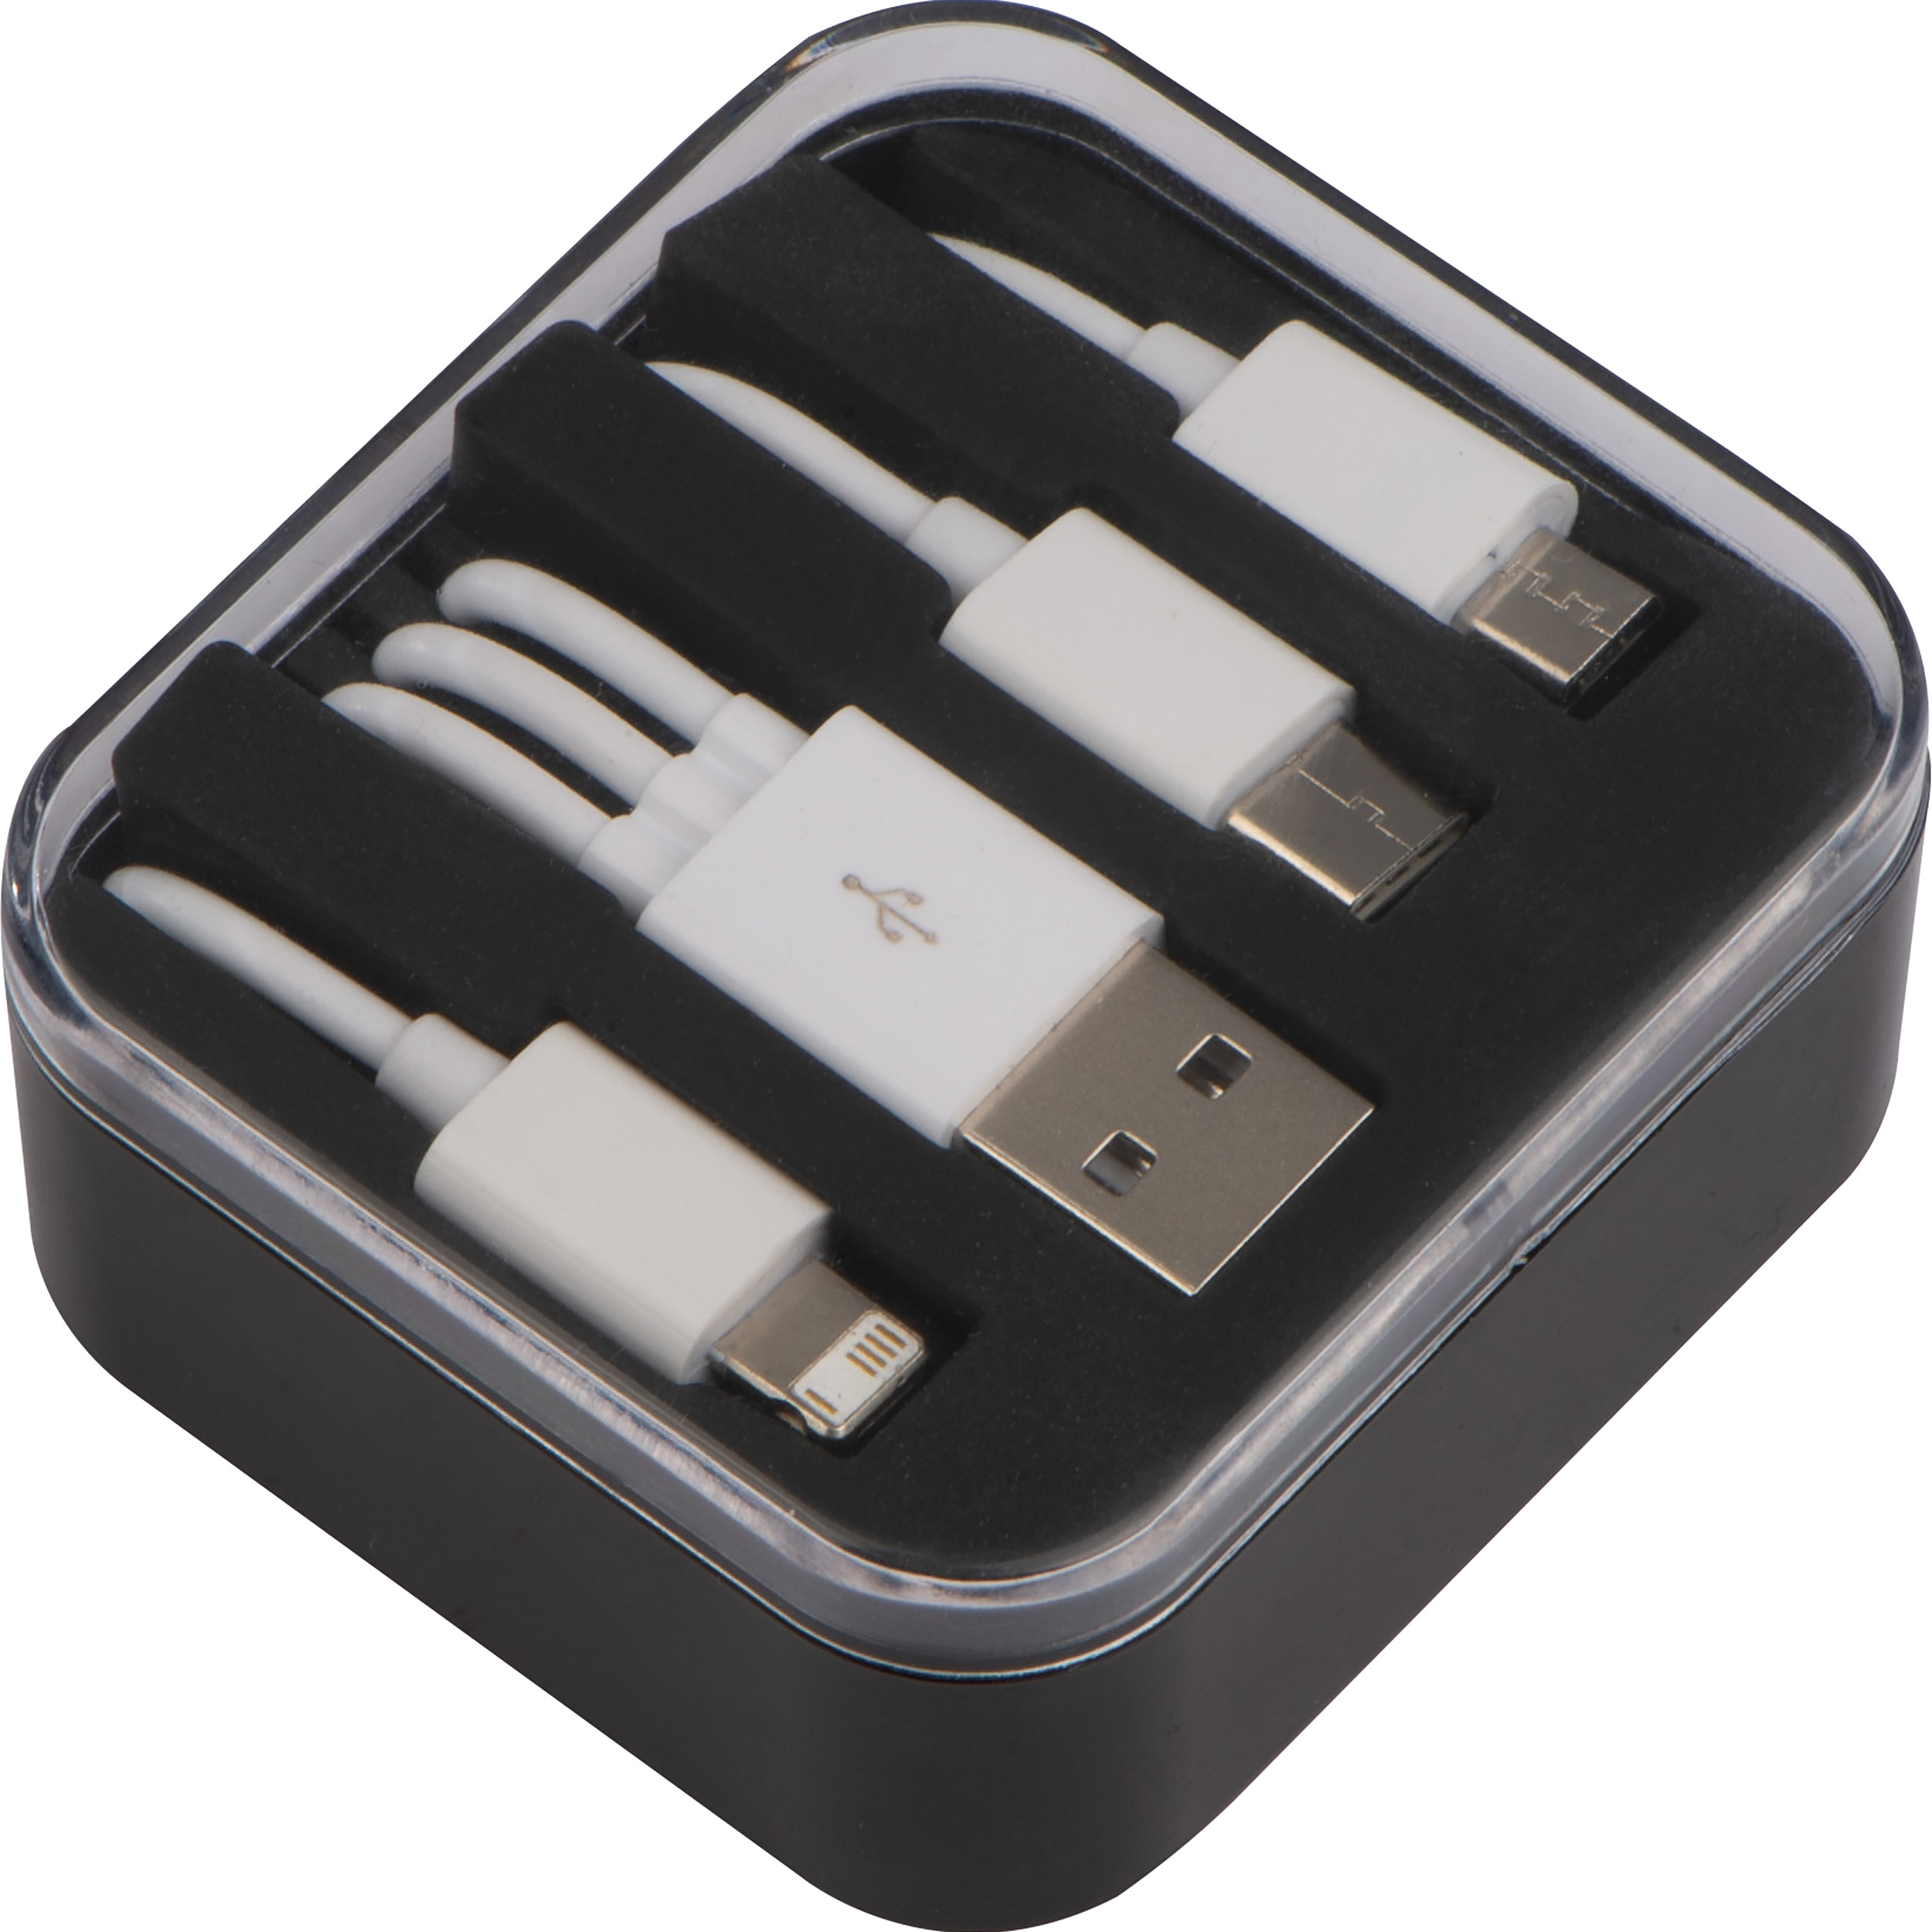 Kunststoffbox mit 3 in 1 USB-Ladekabel